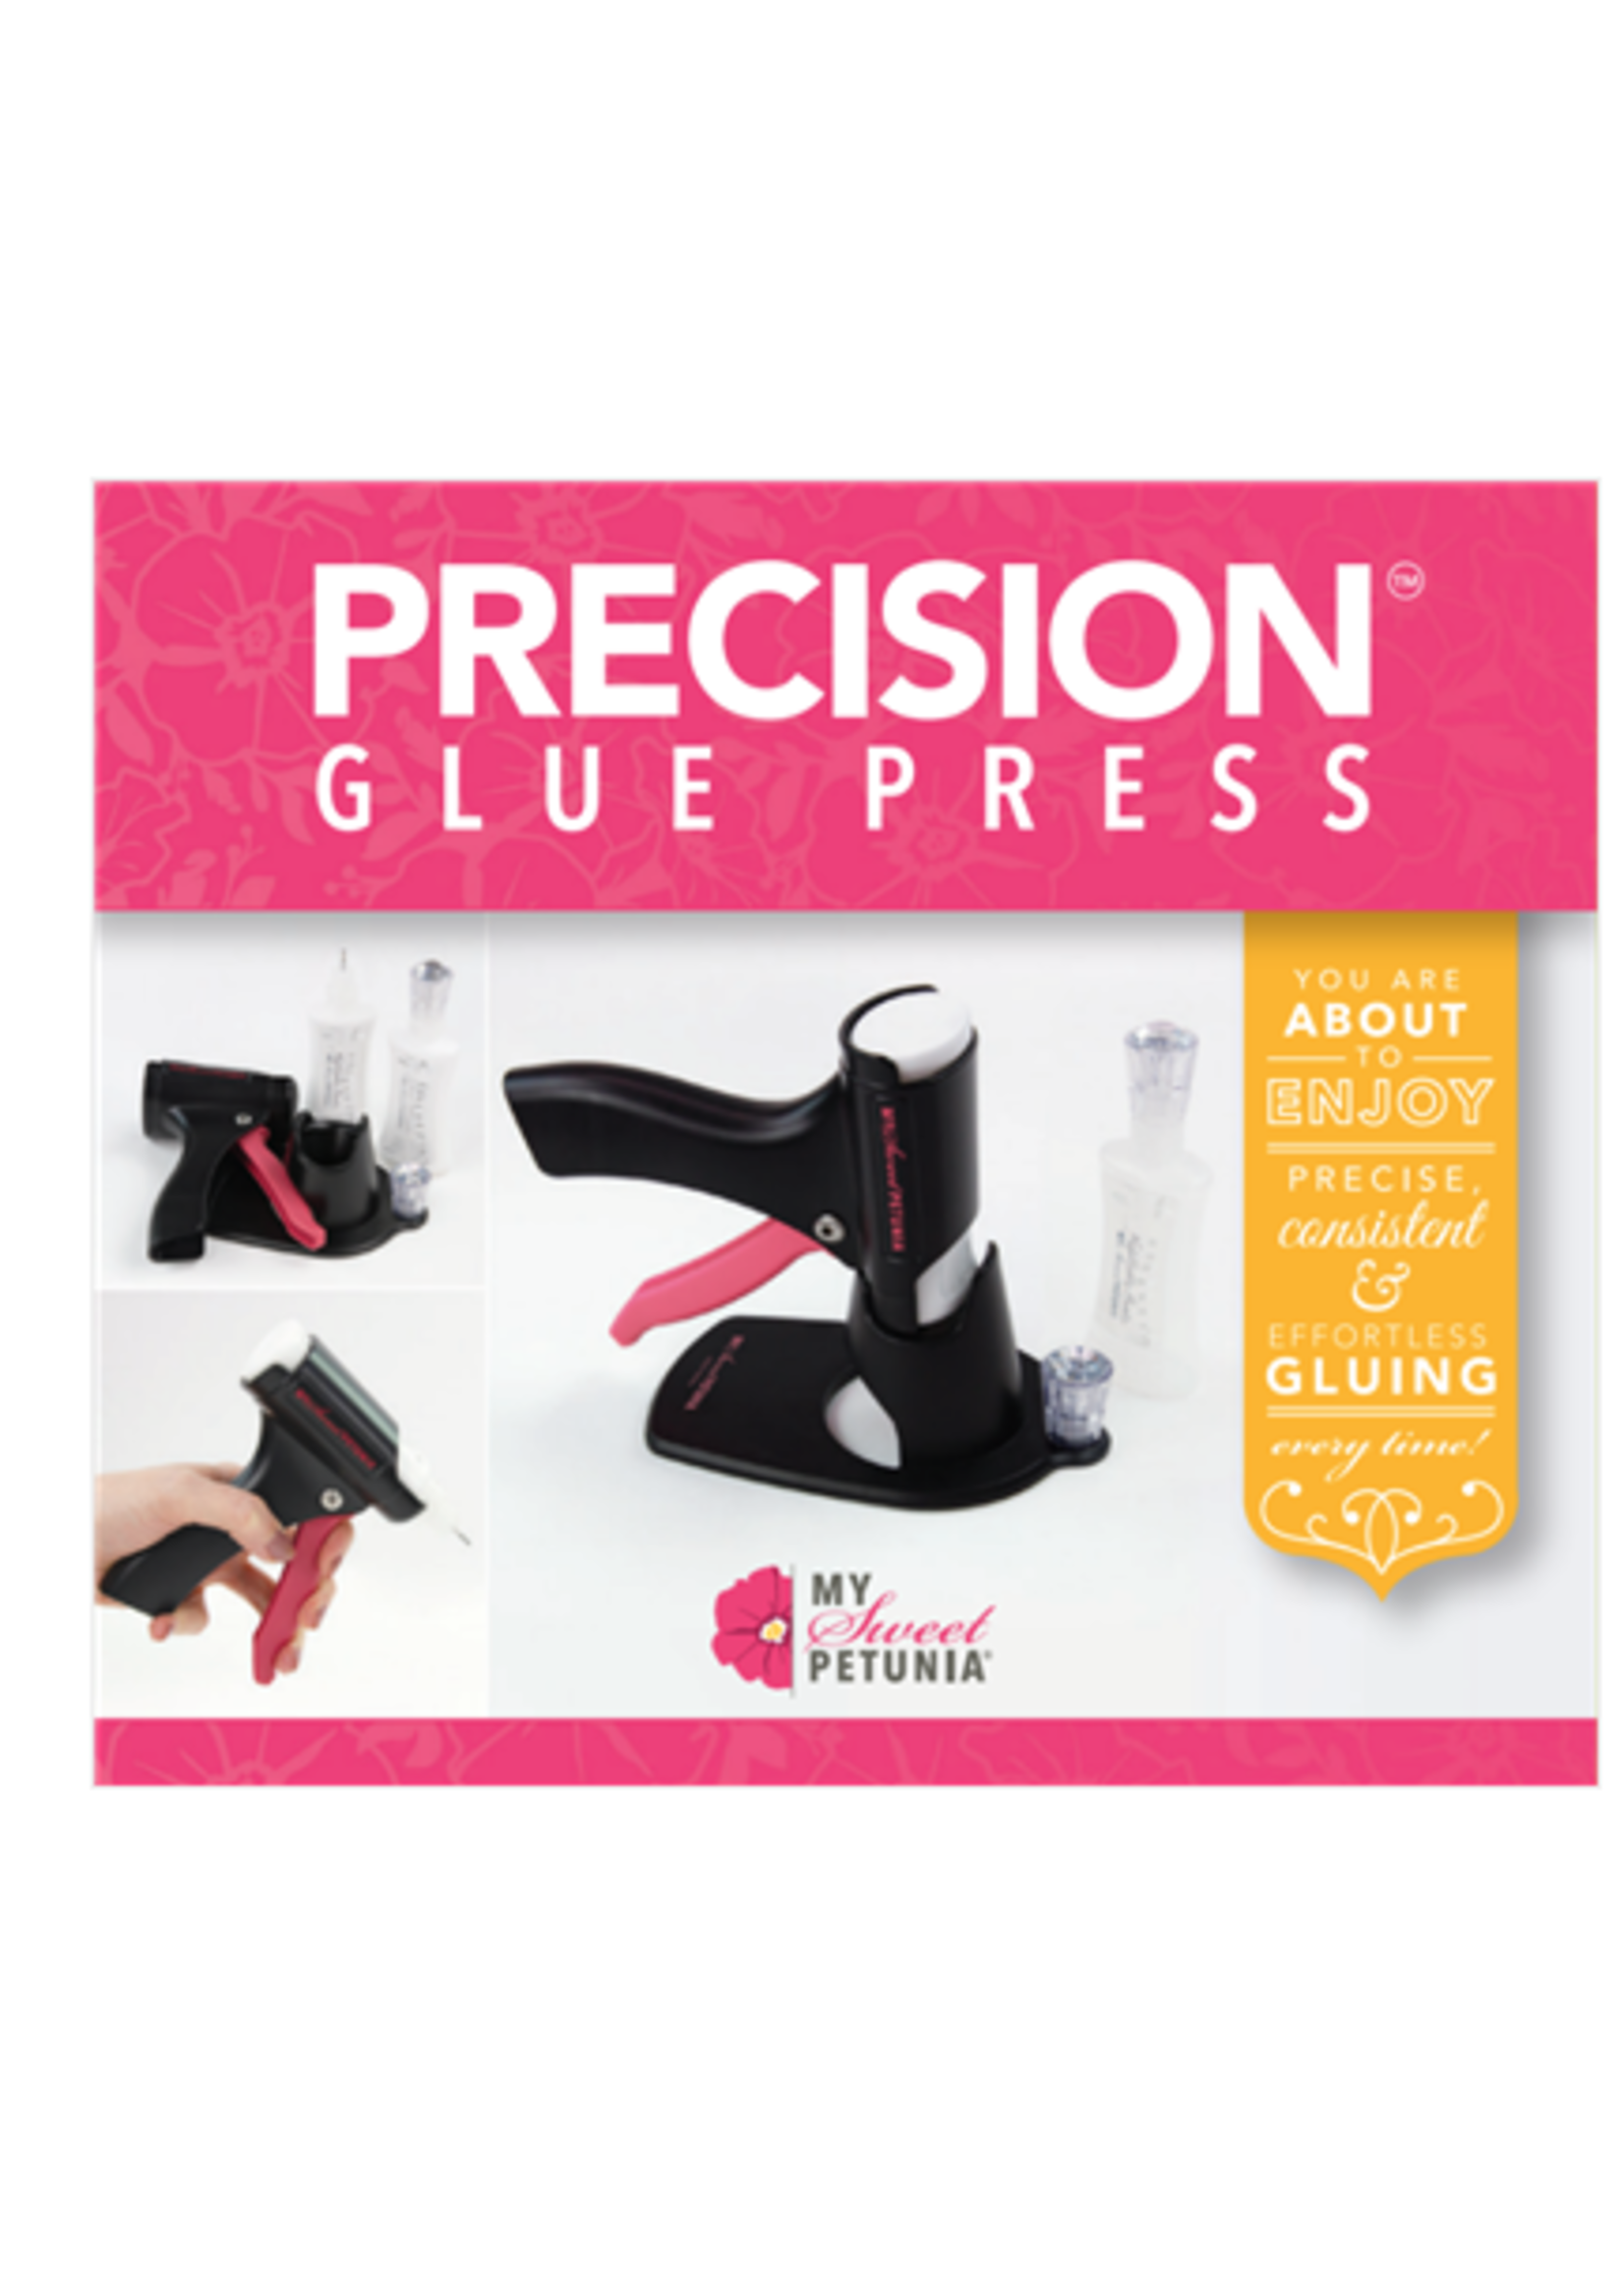 My sweet petunia Precision Glue Press